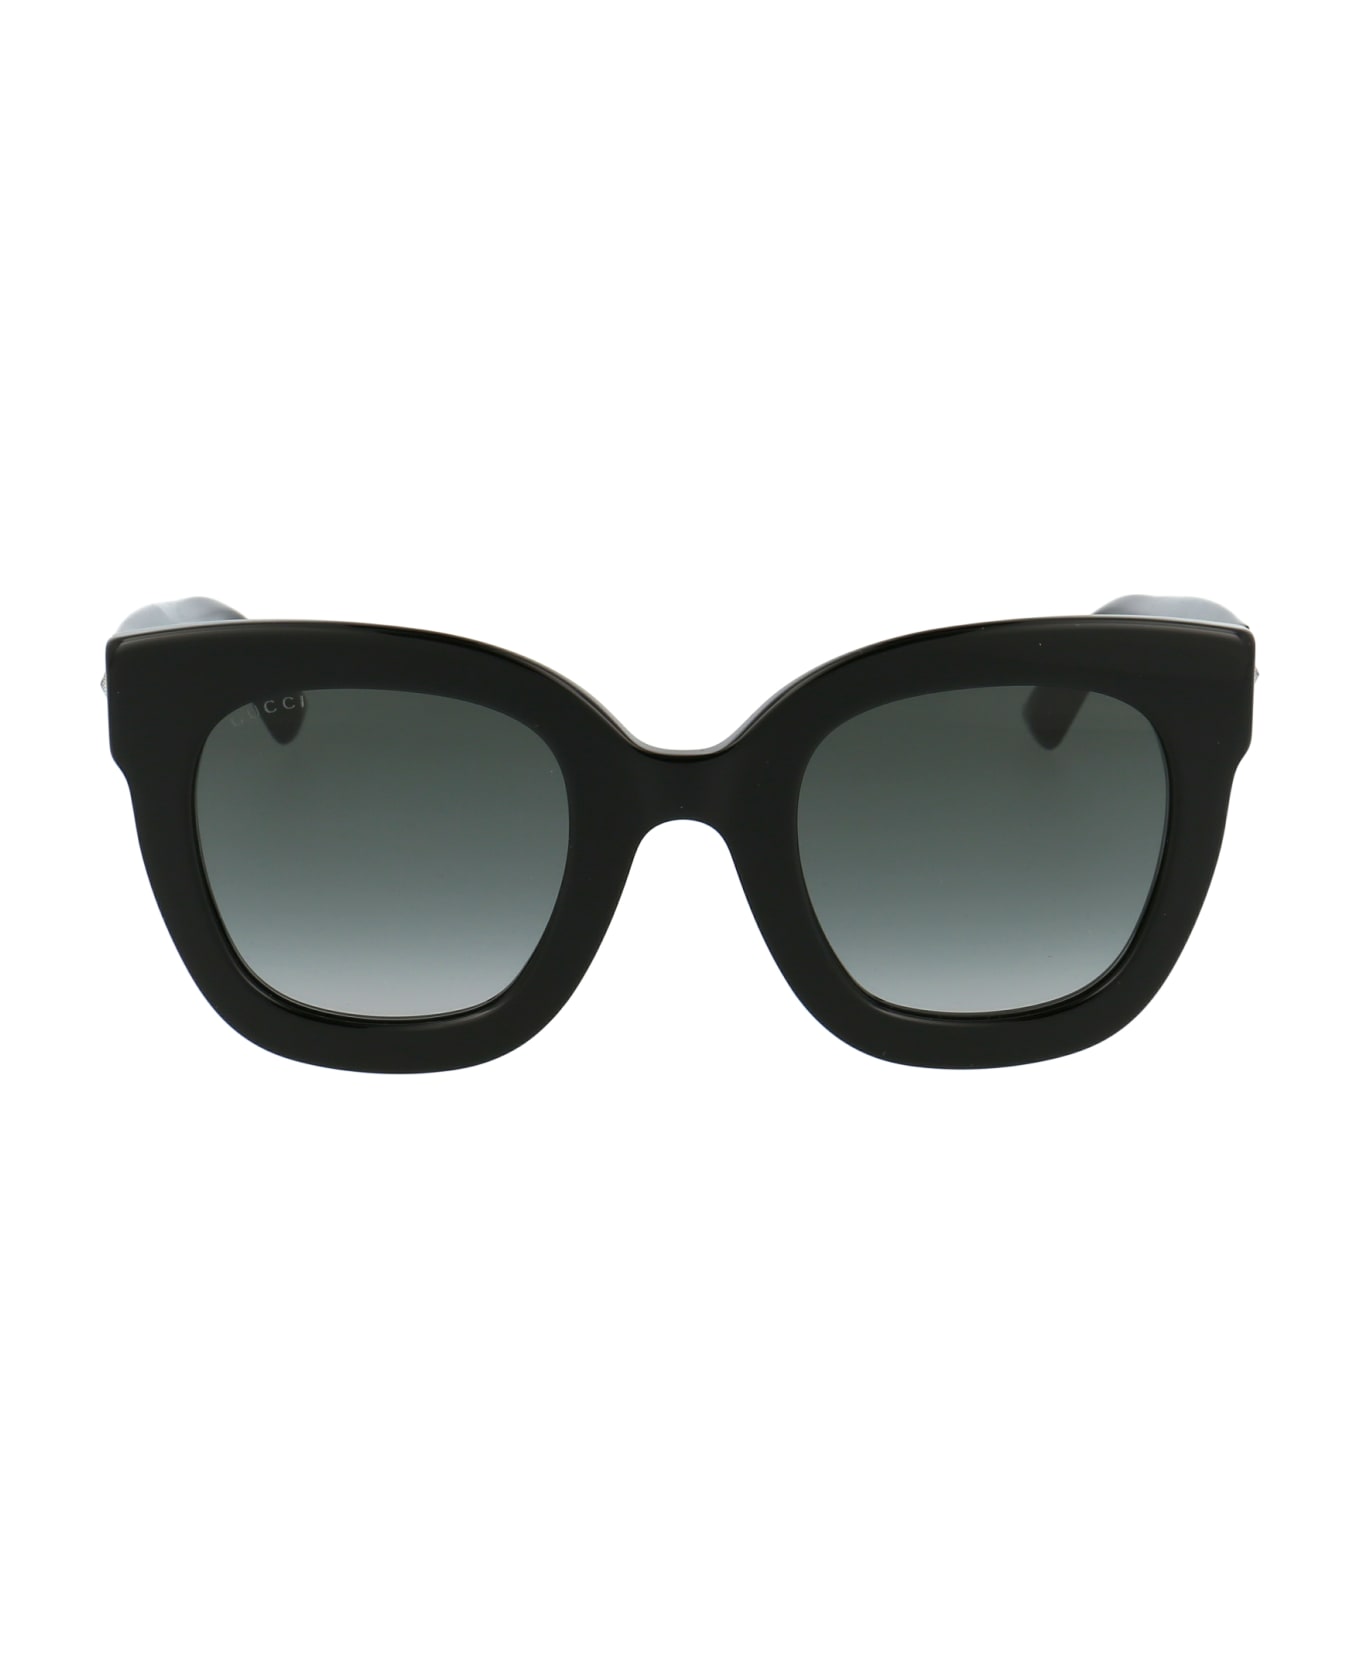 Gucci Eyewear Gg0208s Sunglasses - 001 BLACK BLACK GREY